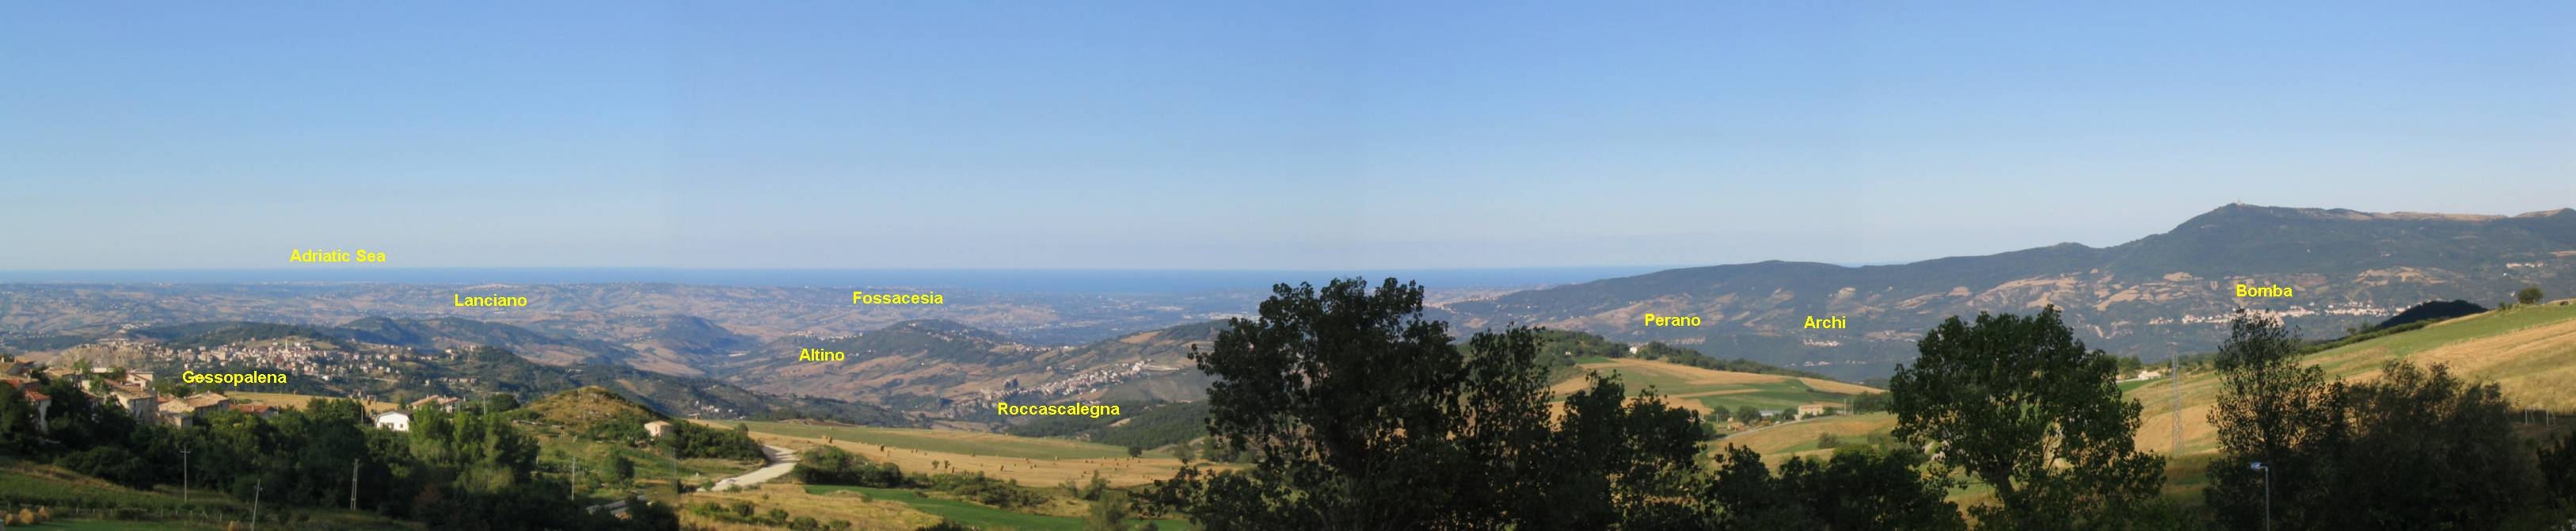 Sangro Valley Panoramic View, by Silvio DiPaolo